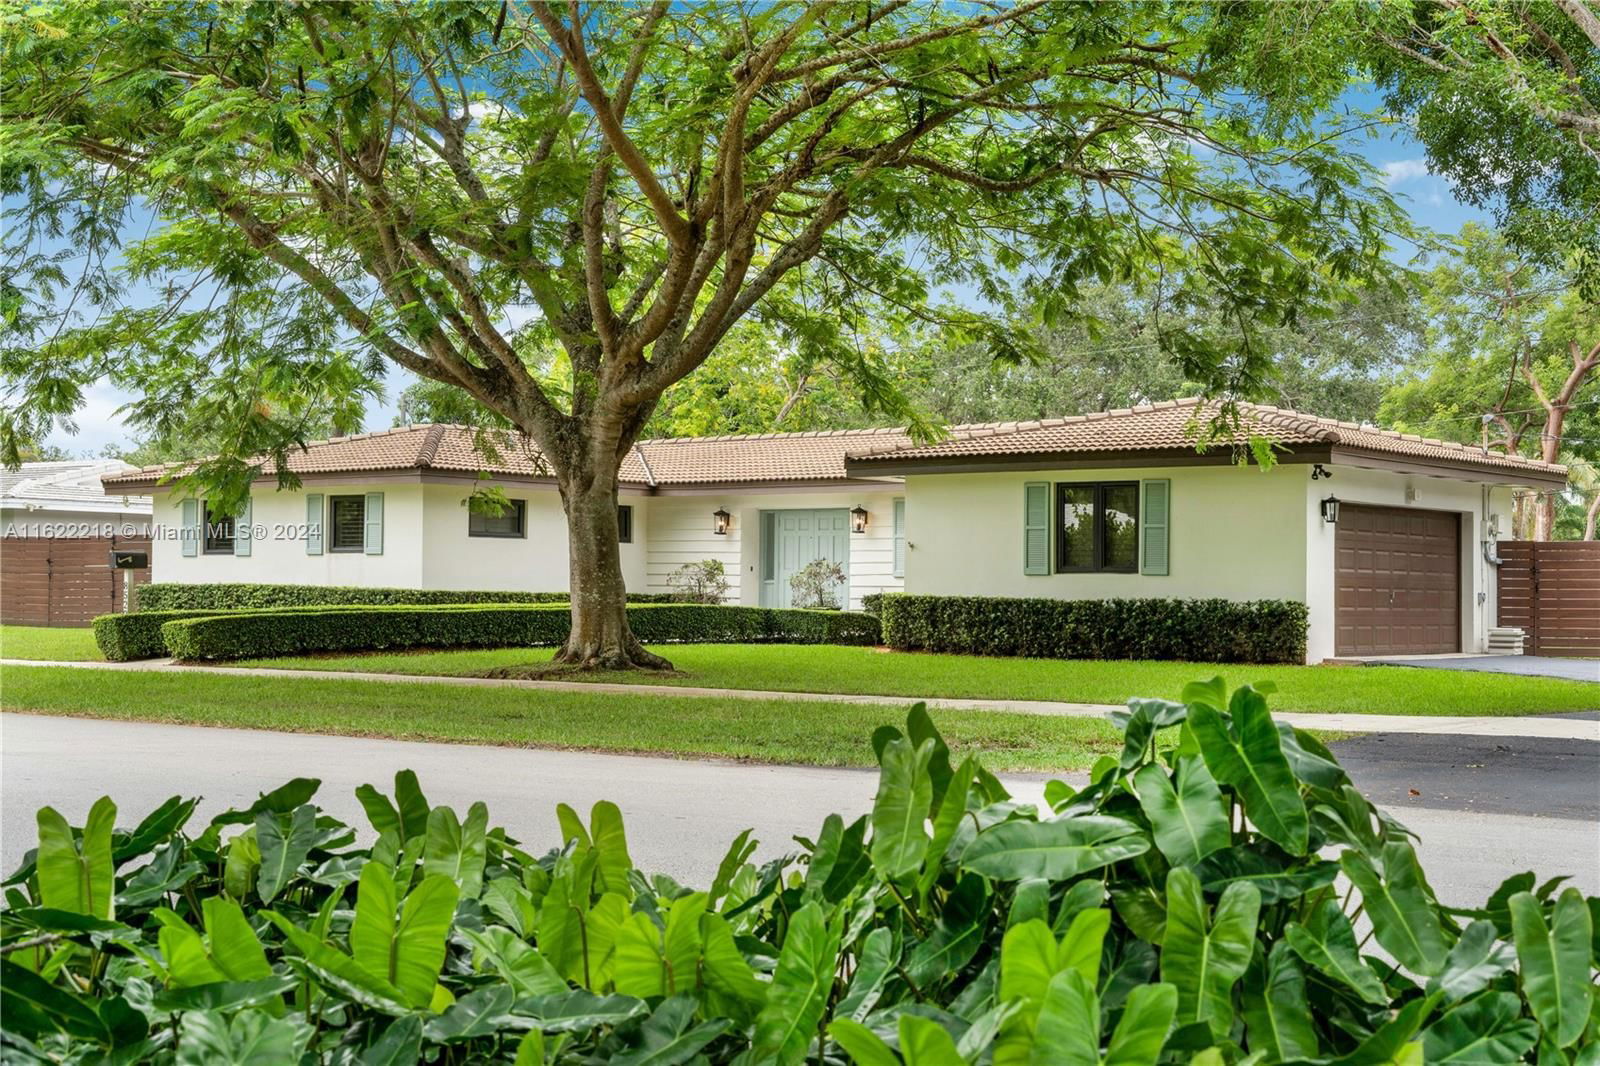 Real estate property located at 8520 160th St, Miami-Dade County, CORAL REEF ESTATES 1ST AD, Palmetto Bay, FL